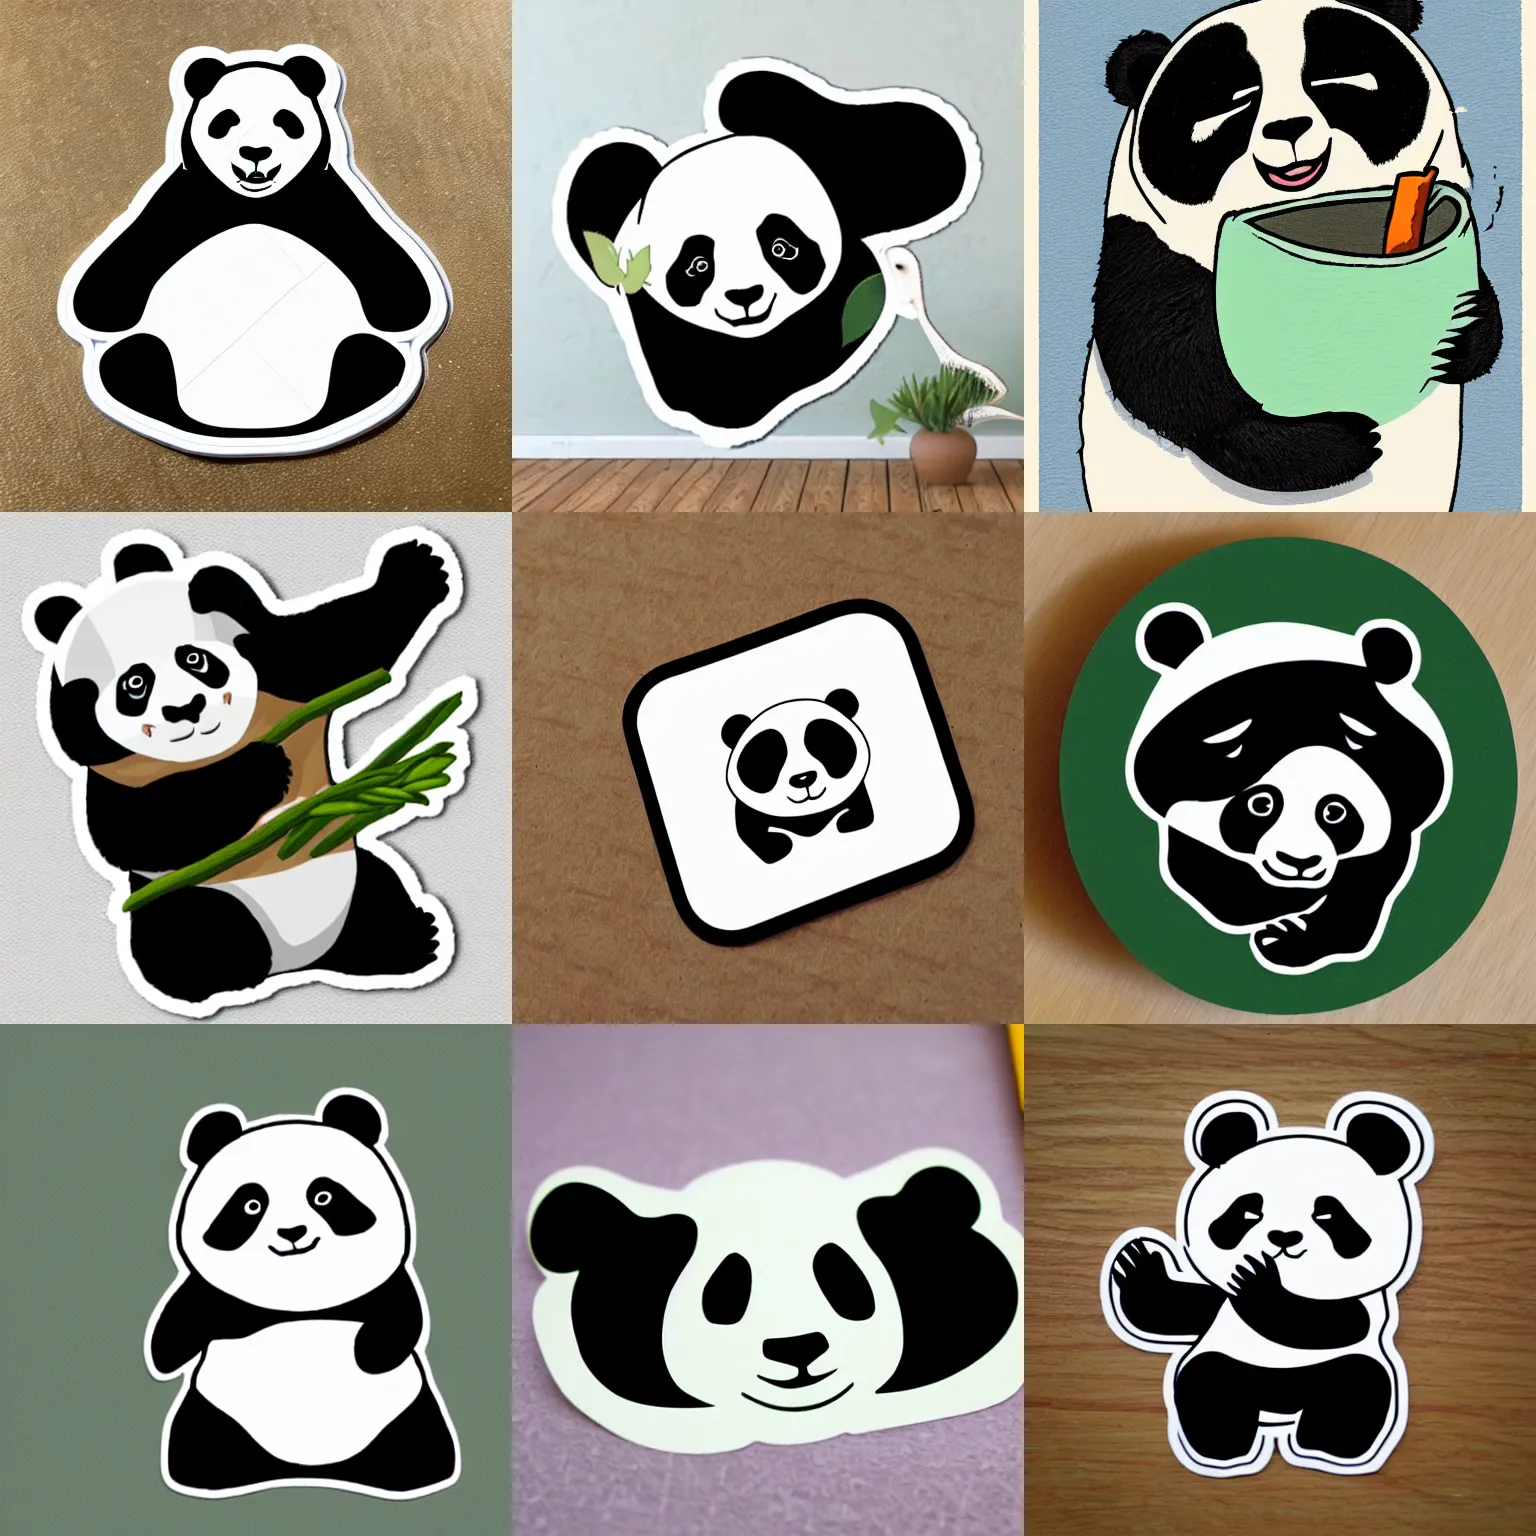 Prompt: a sticker illustration of a panda